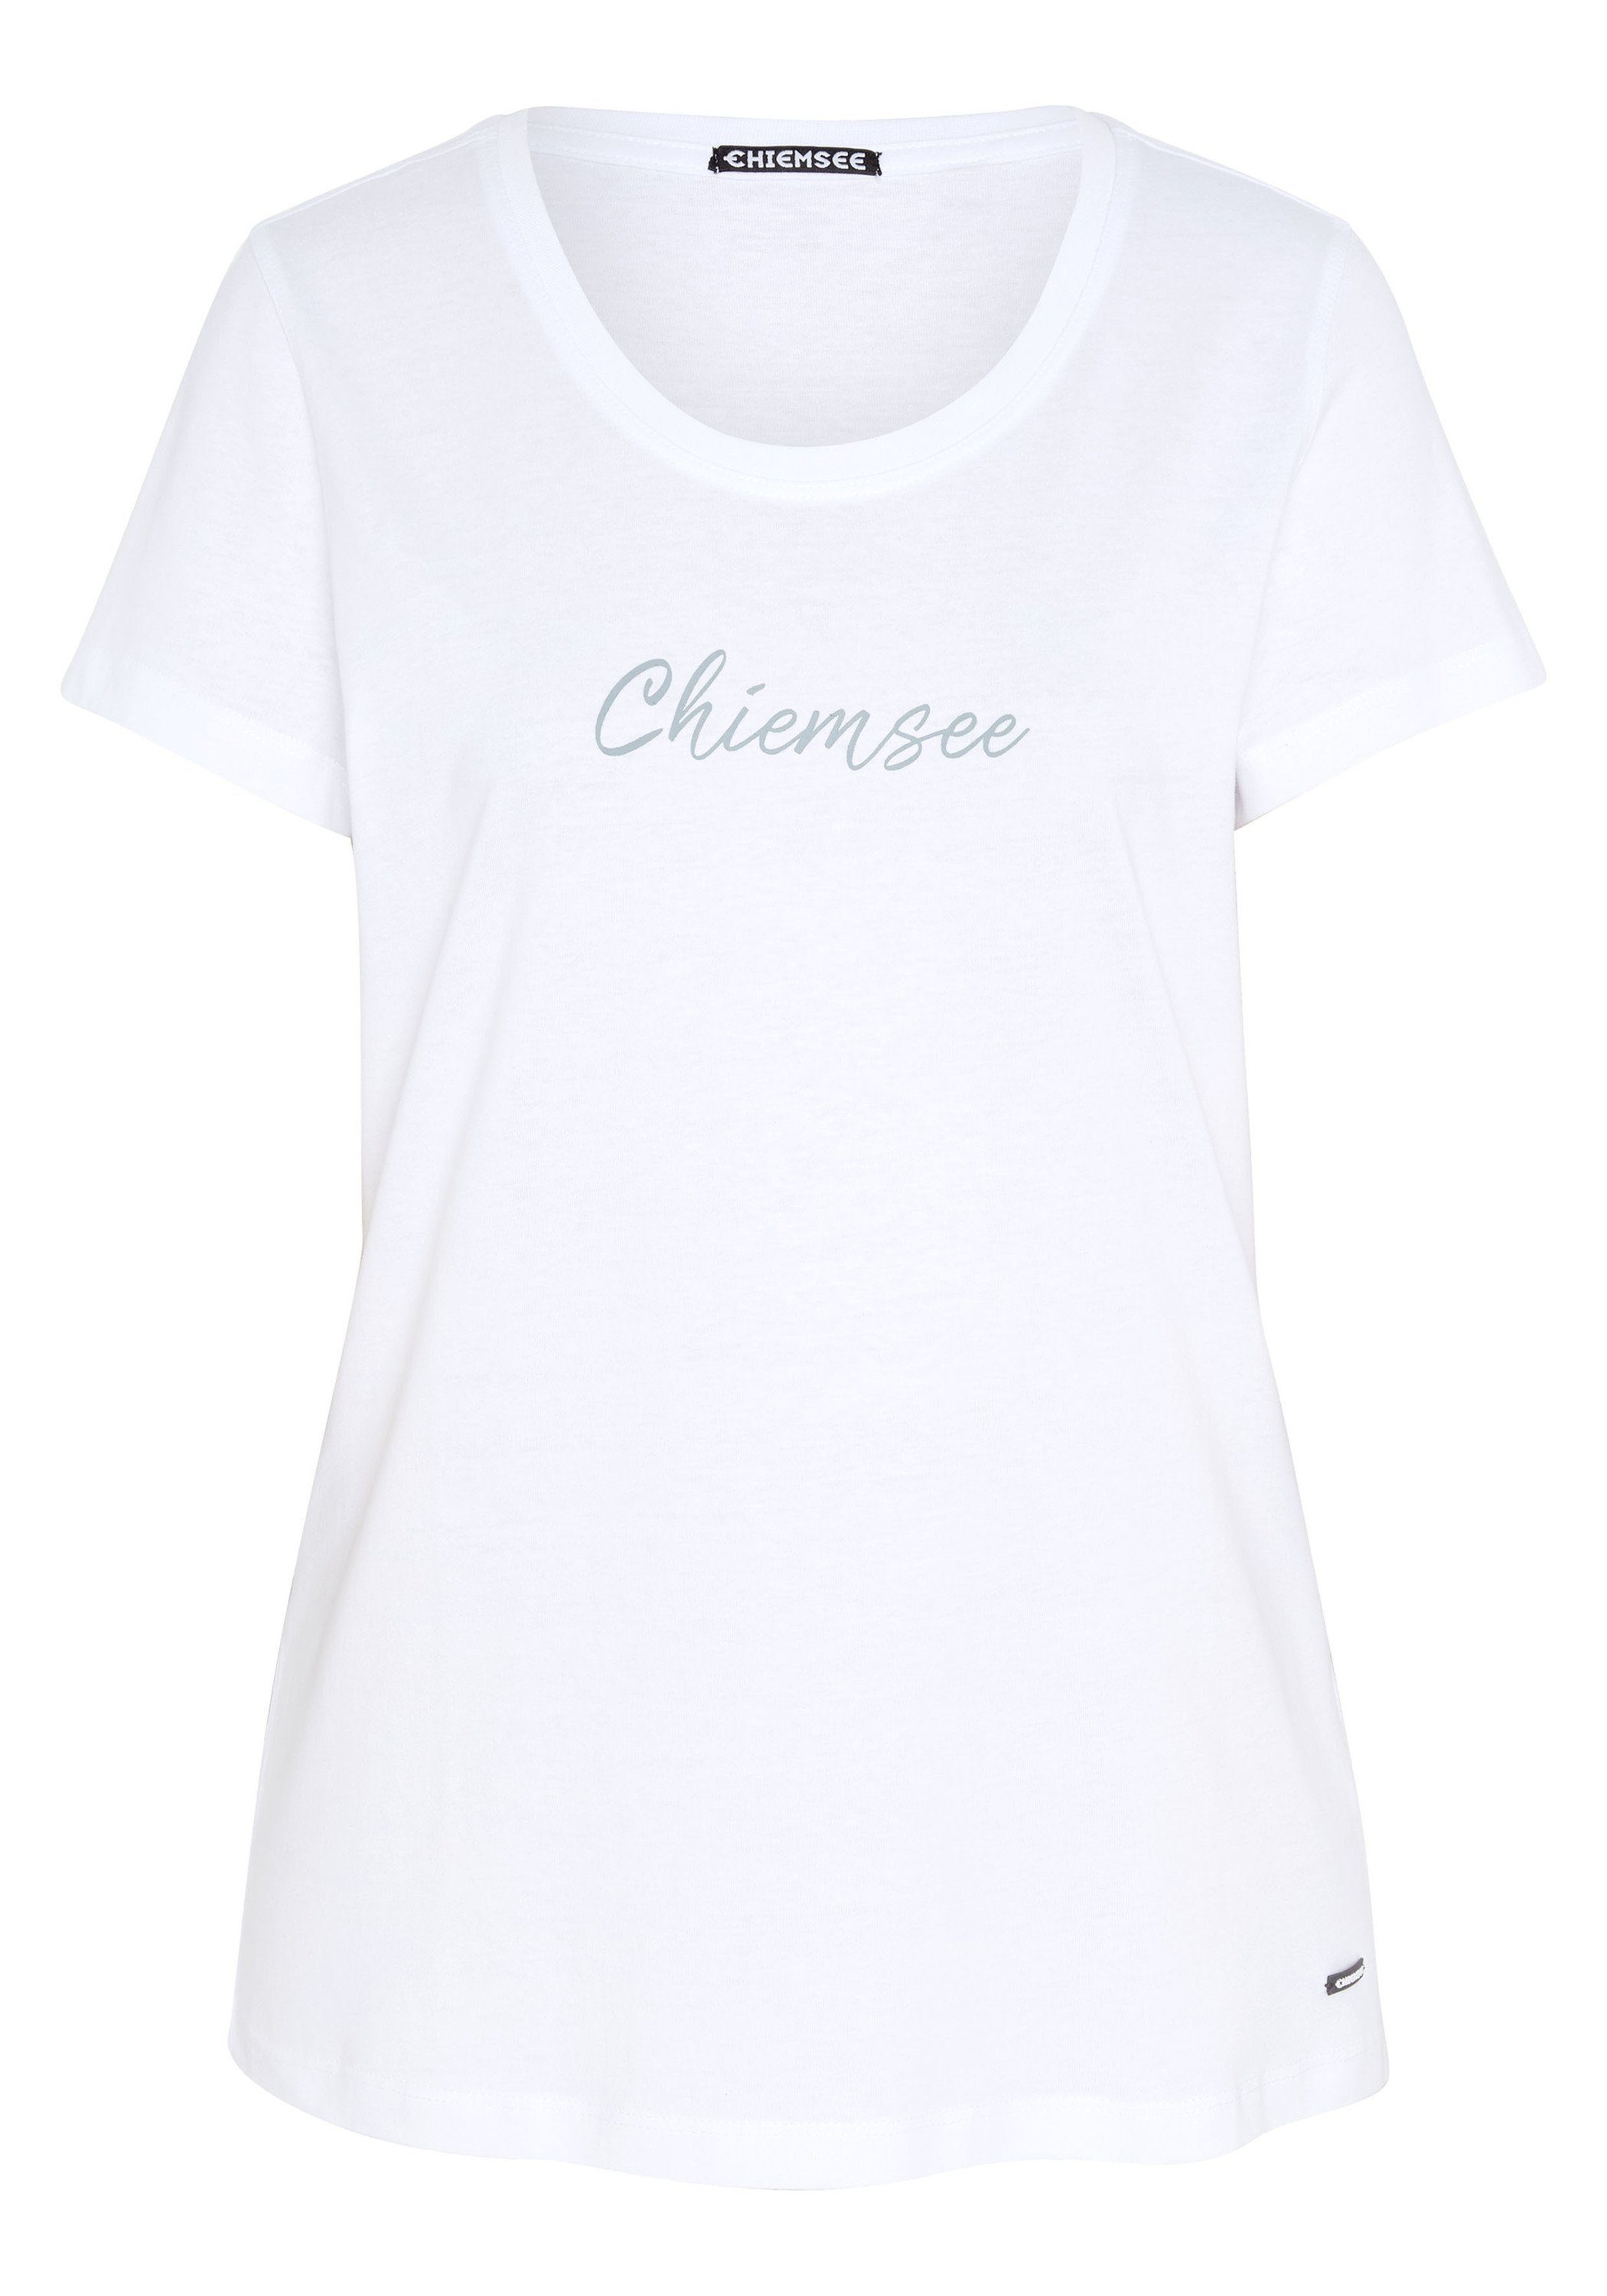 Chiemsee Print-Shirt T-Shirt im Label-Look 1 11-0601 Bright White